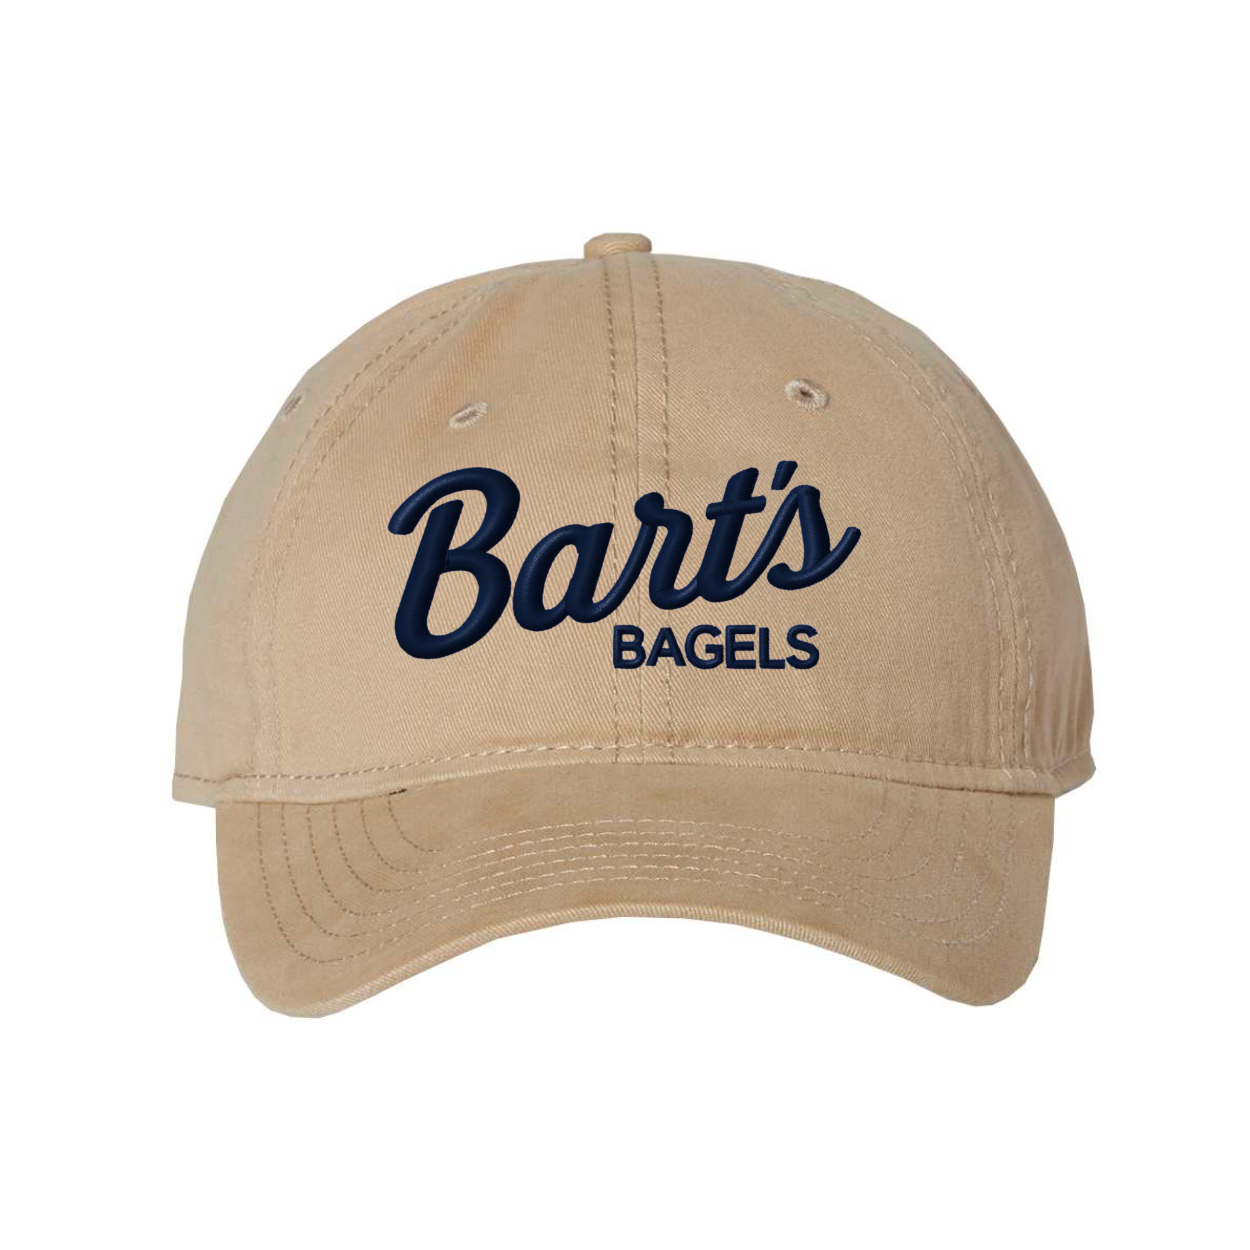 Bart's Bagels - Dad Hat in Khaki